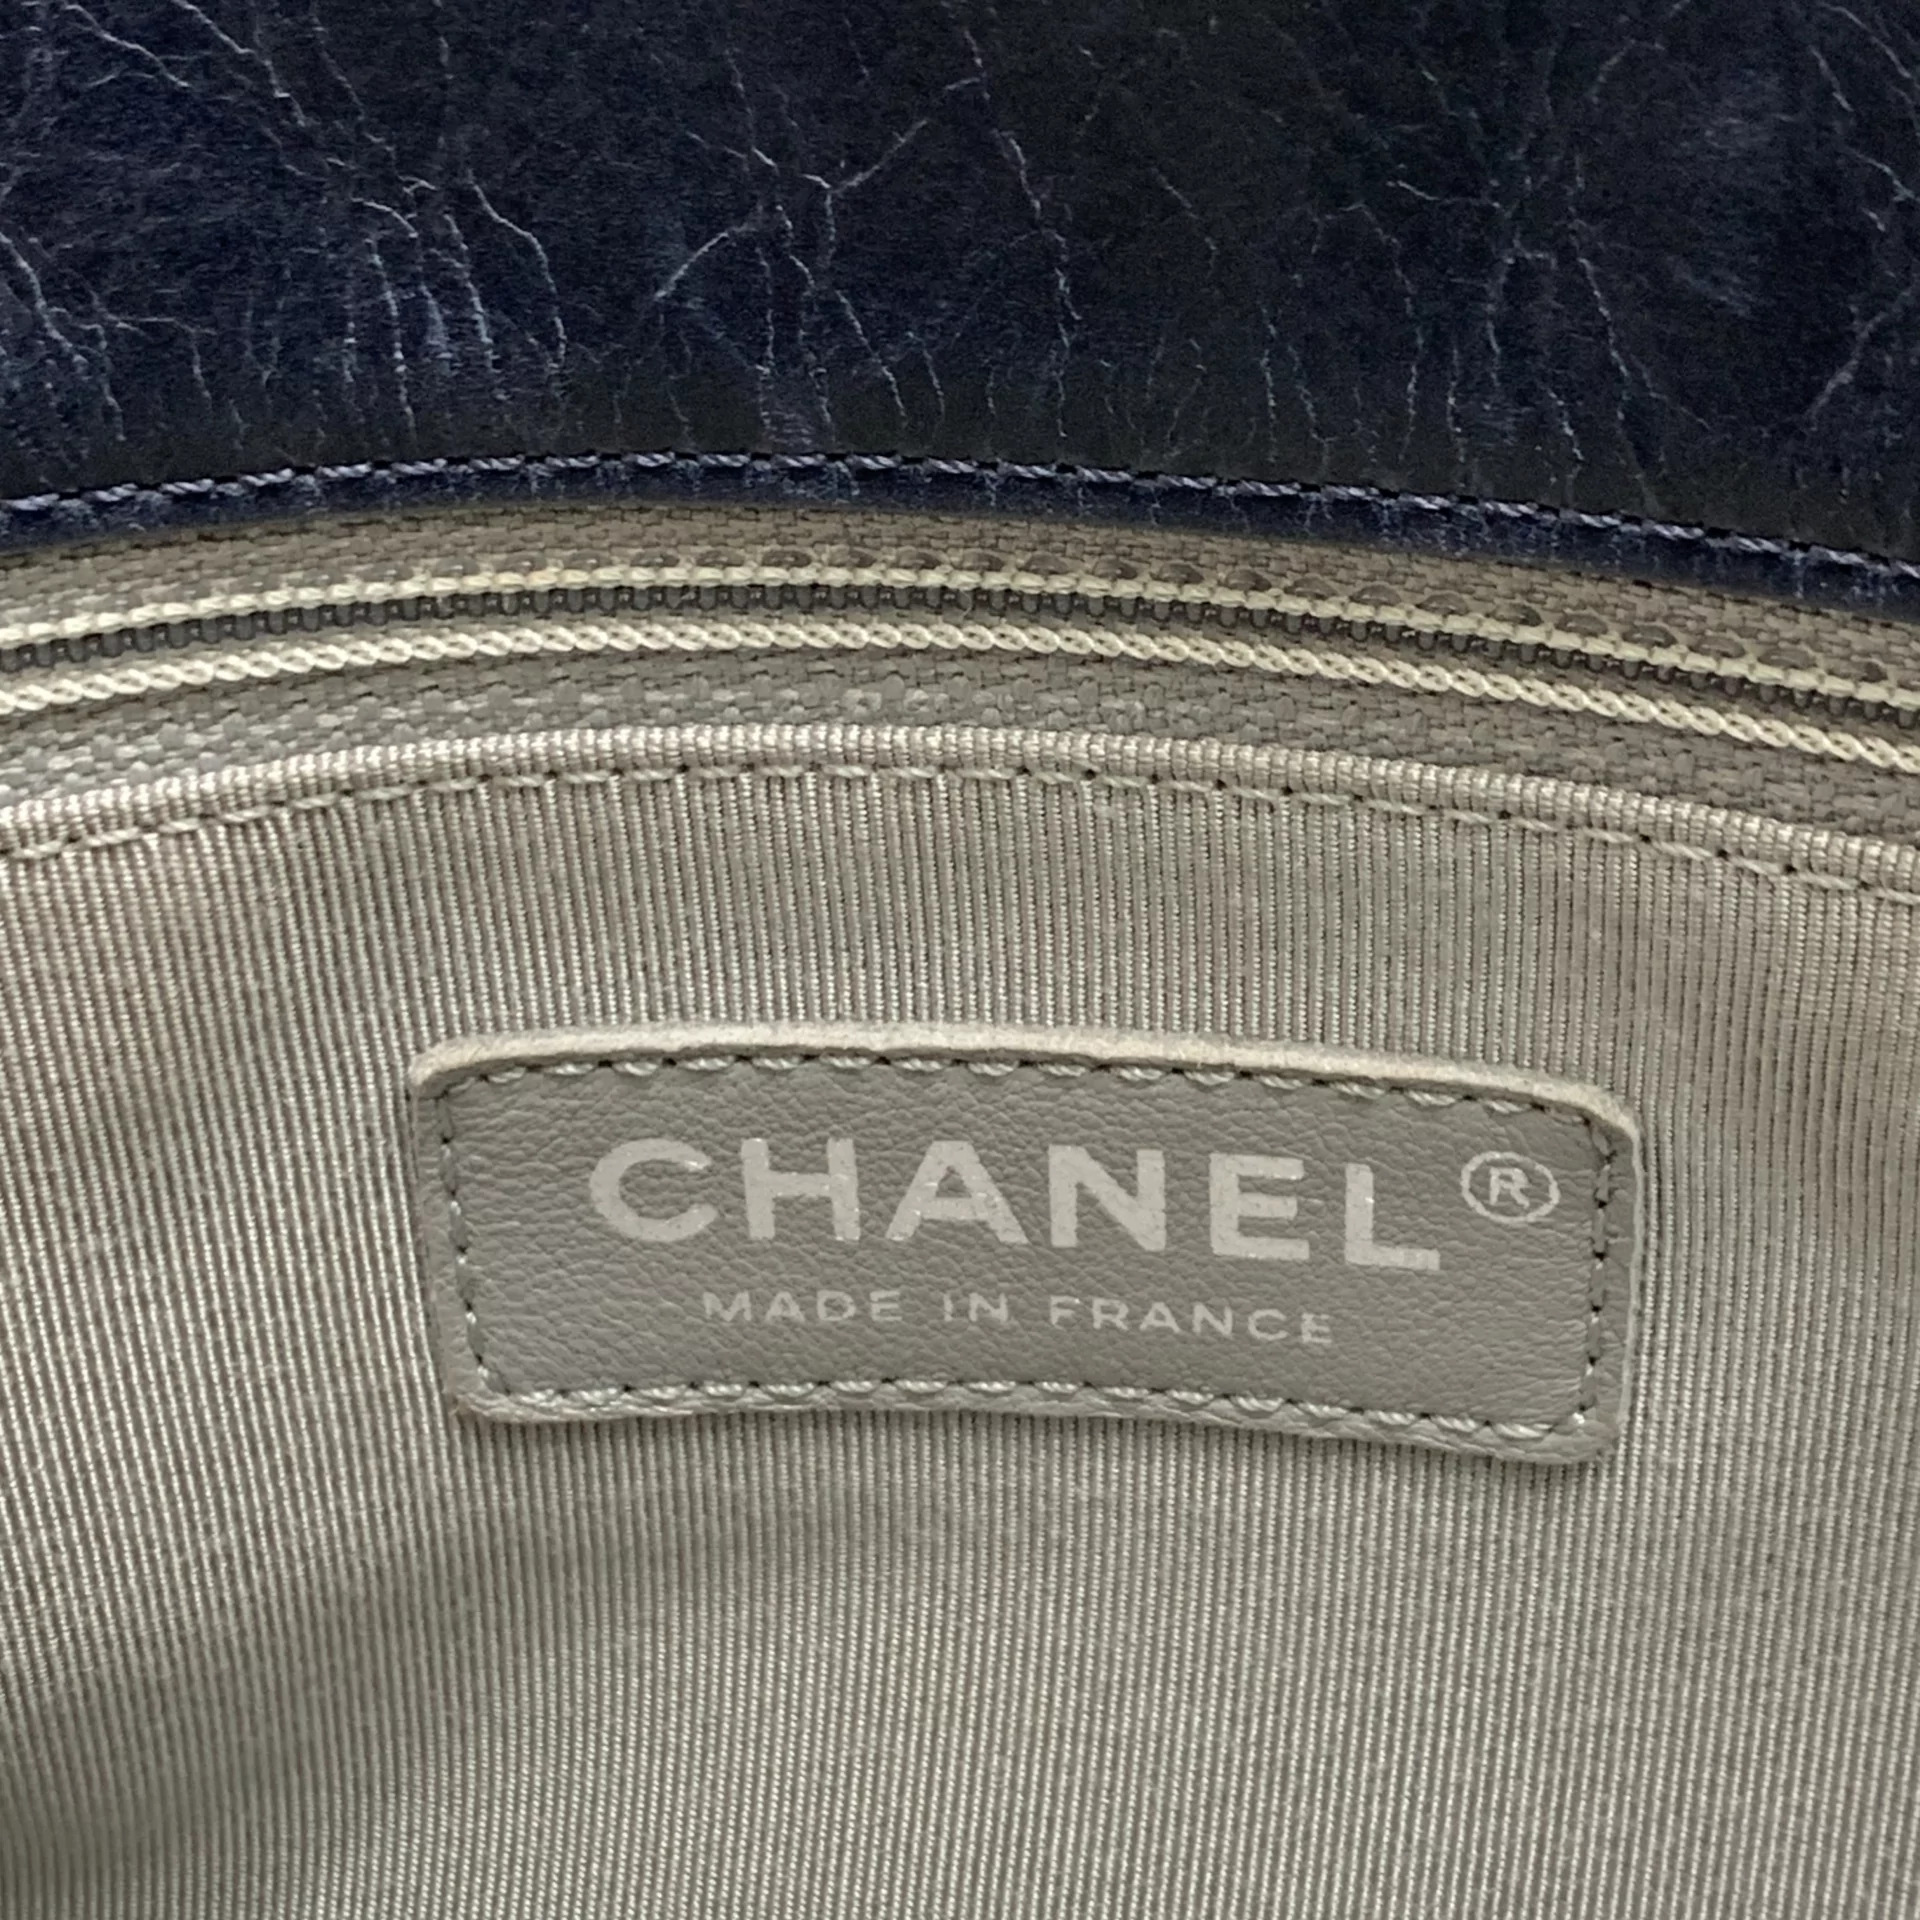 Bolsa Chanel Couro Marinho